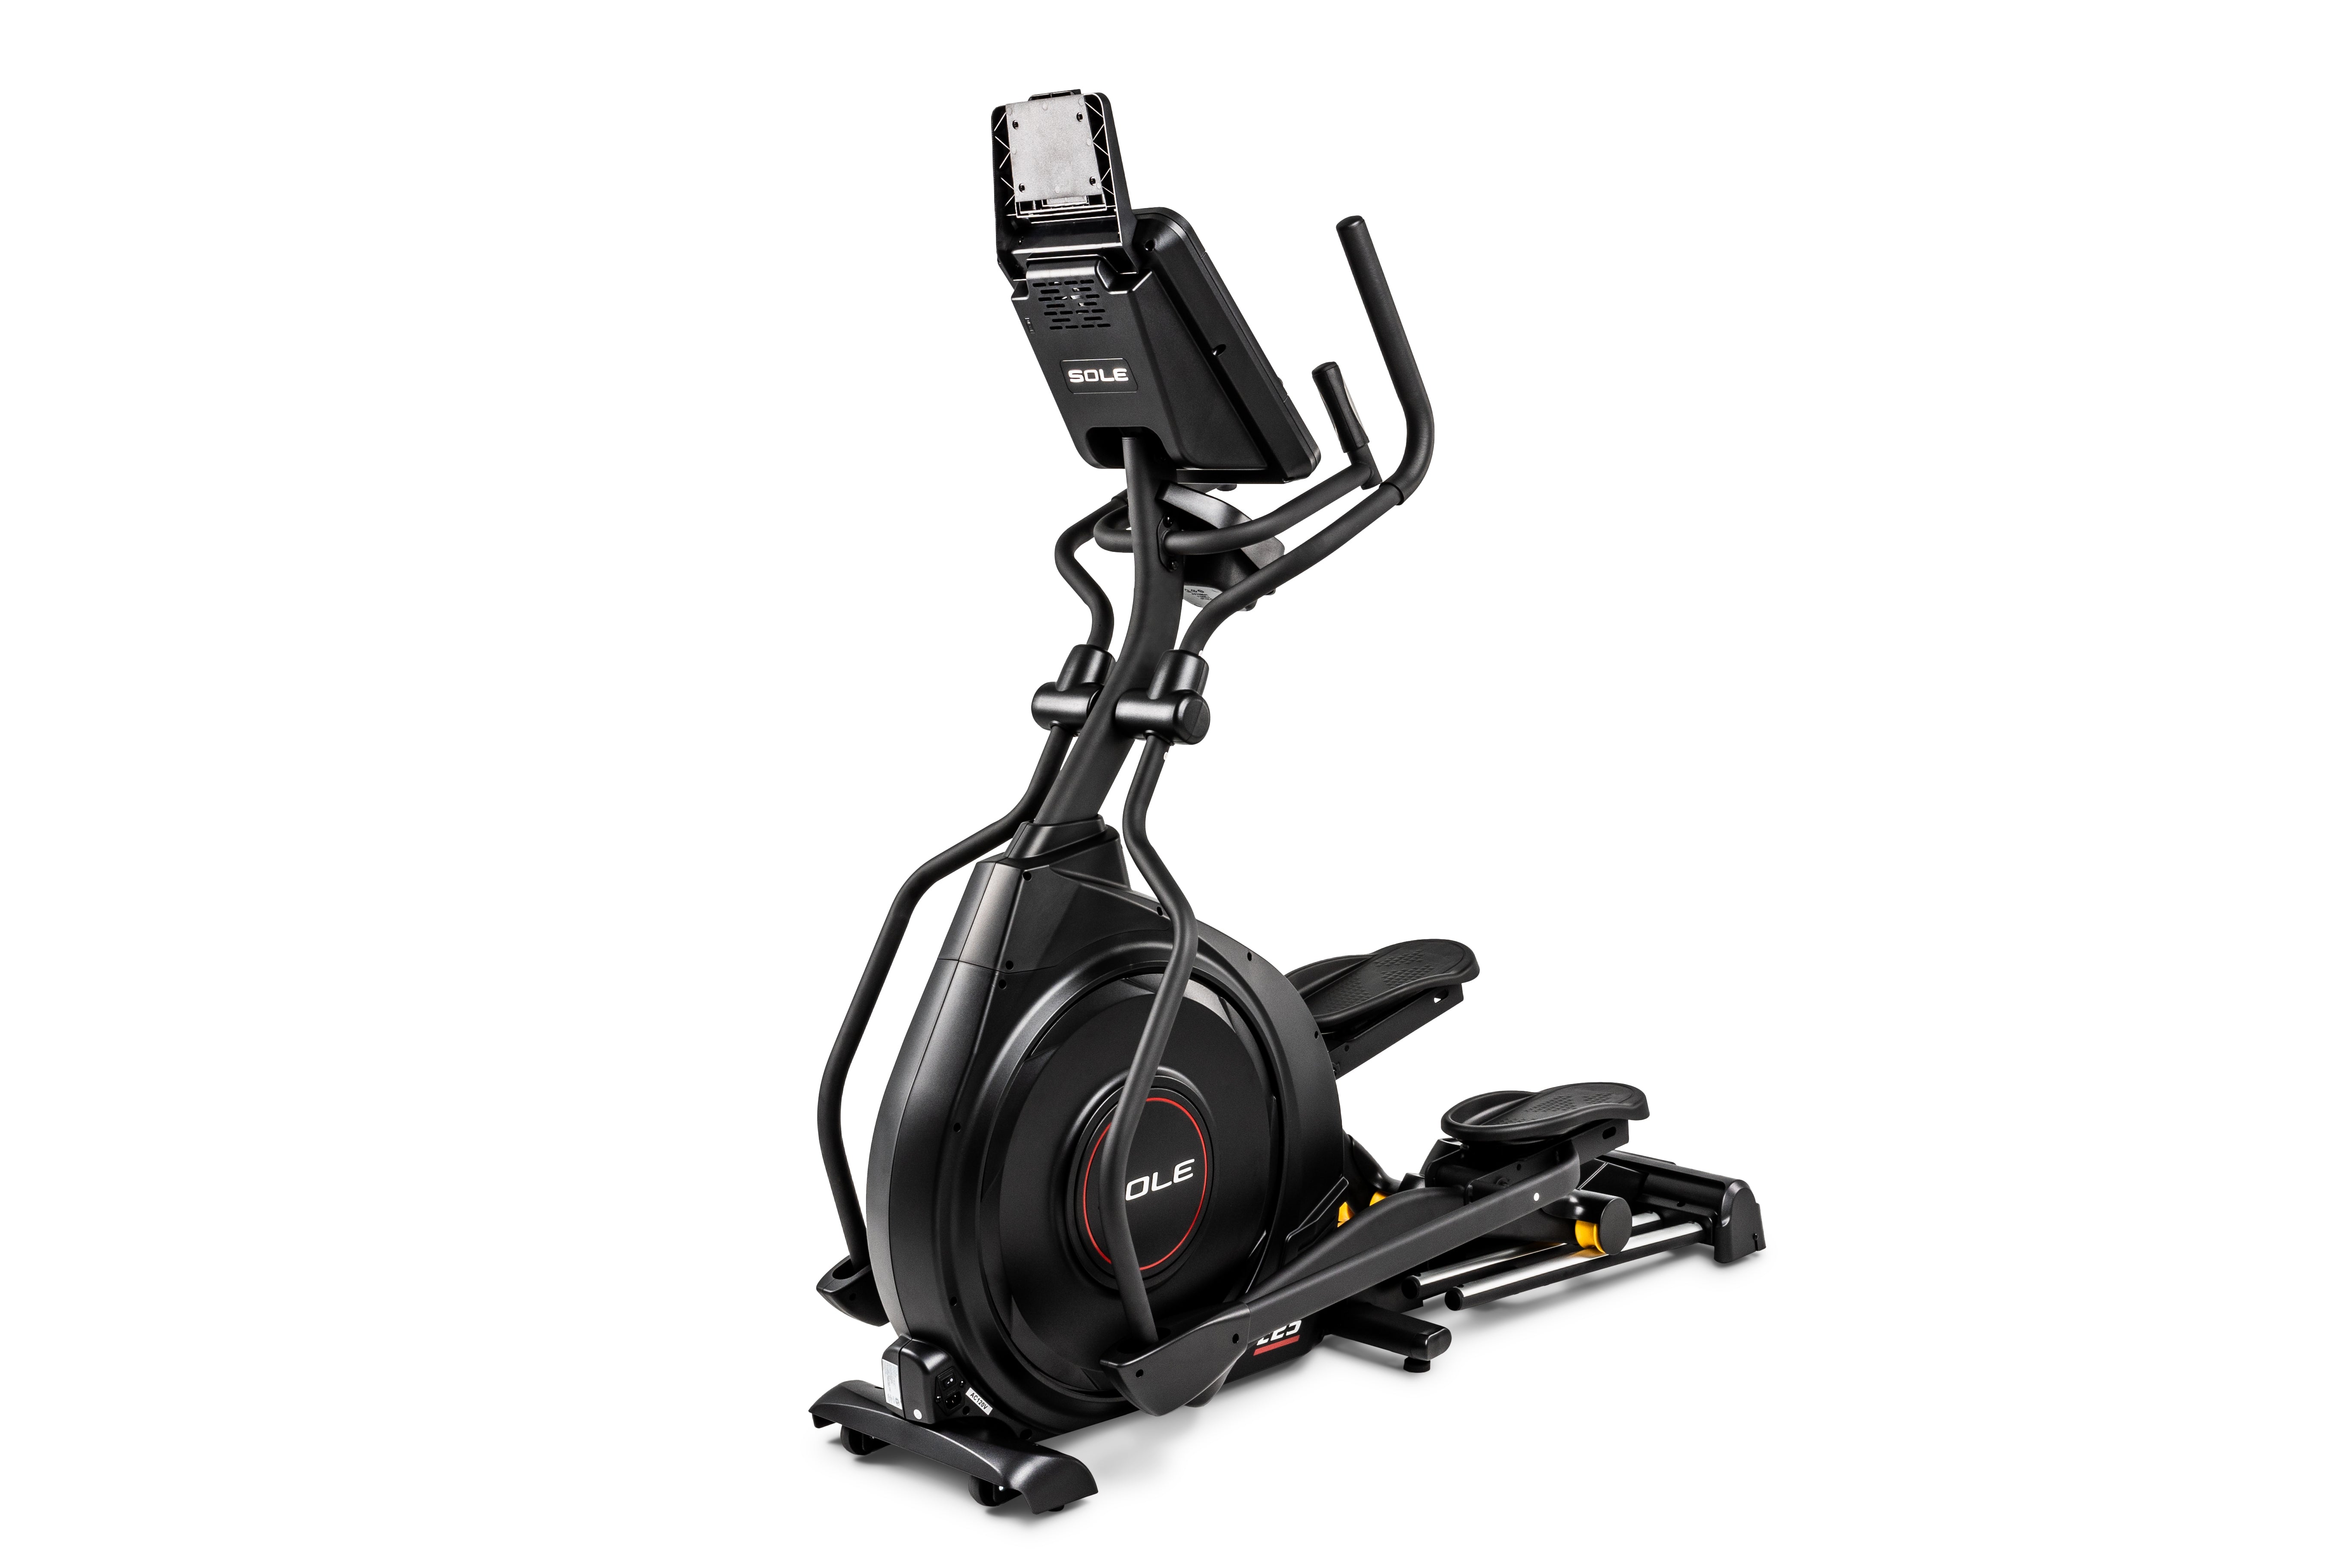 Sole E25 elliptical trainer showcasing its digital screen, ergonomic handlebars, footplates, and sleek black design, positioned against a white backdrop.